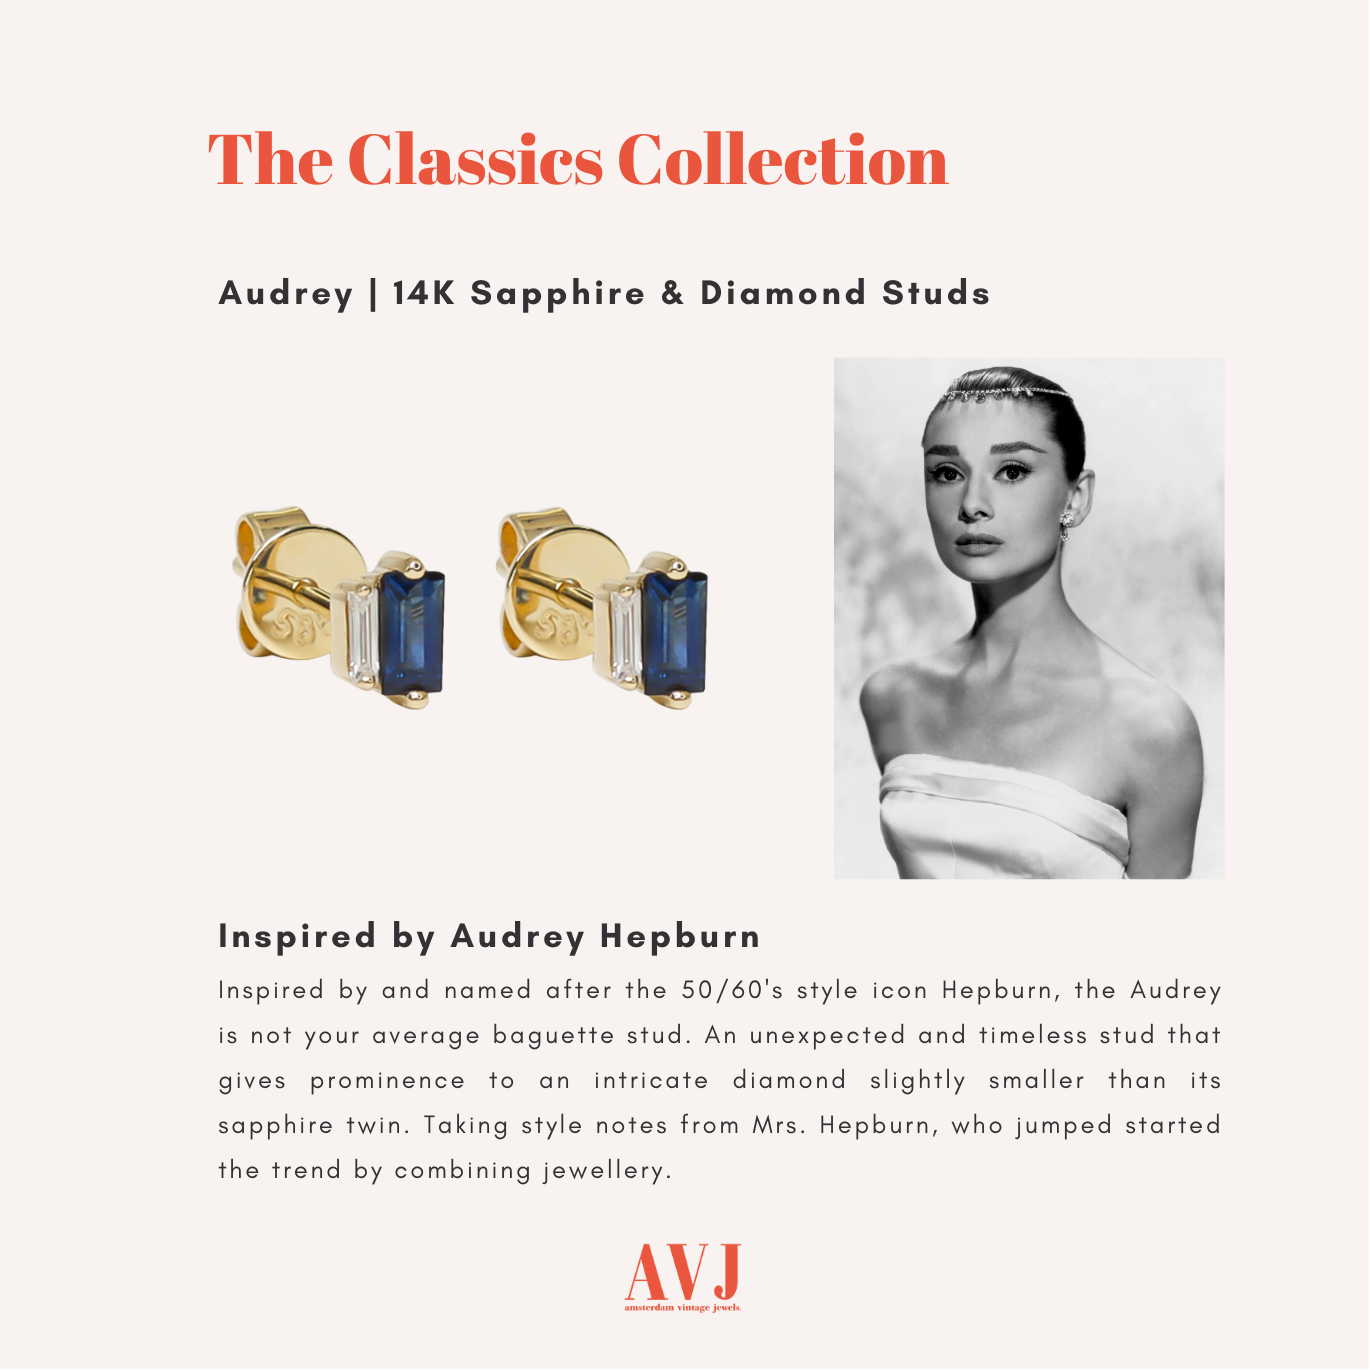 Audrey | 14K Sapphire and Diamond Baguette Studs